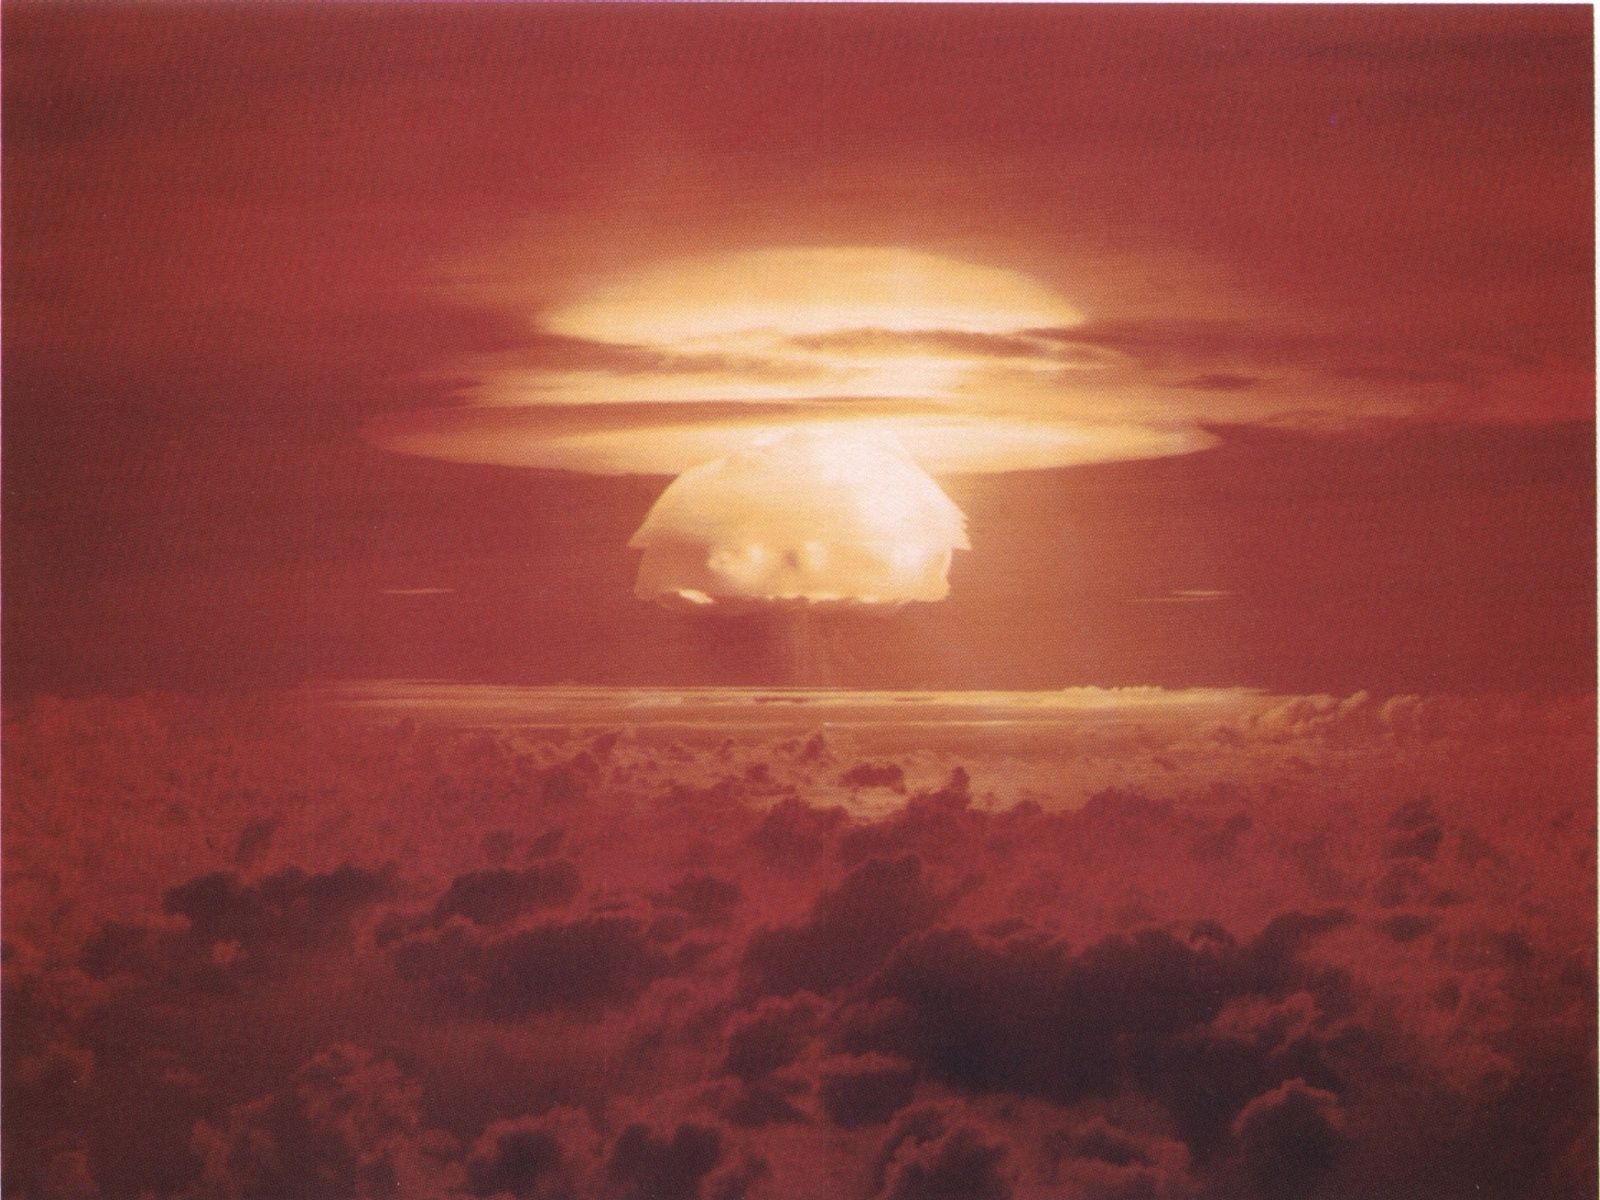 Thermonuclear blast